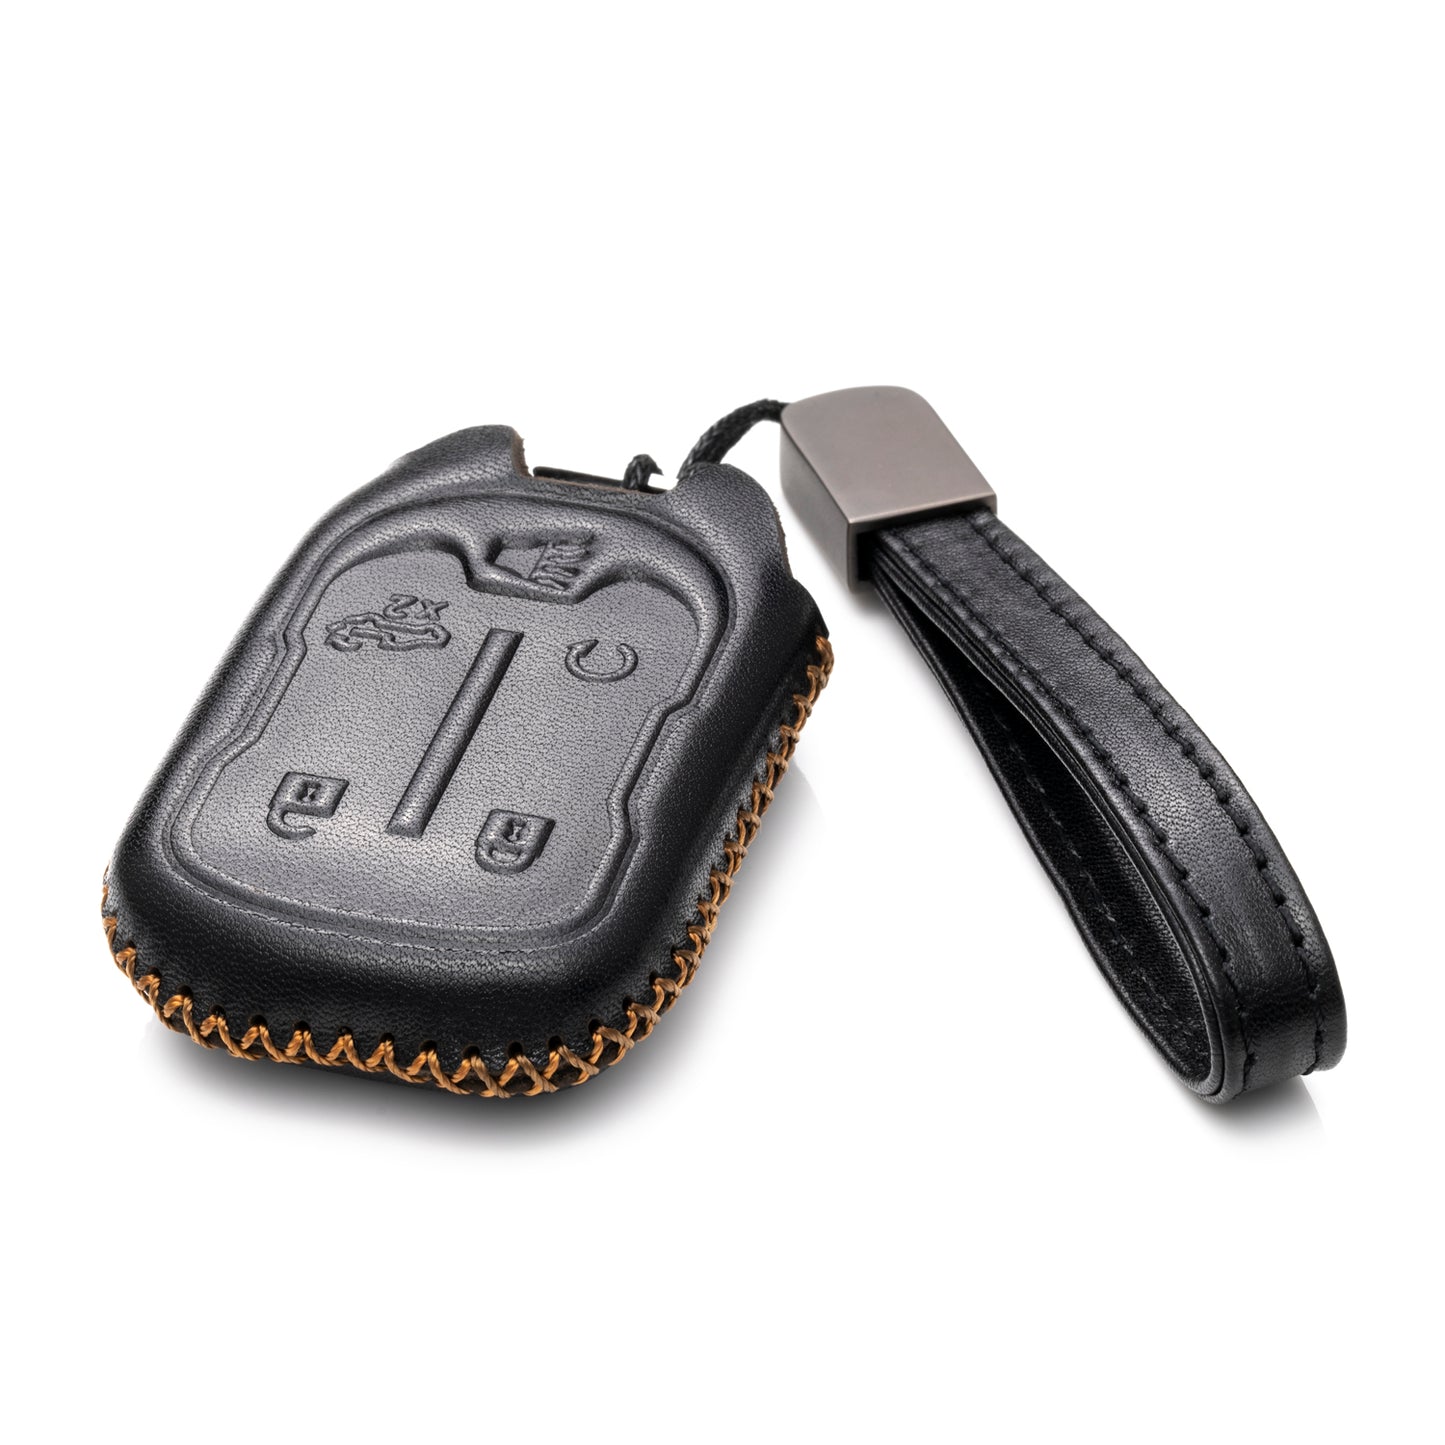 Vitodeco 4-Button Leather Smart Key Fob Case Compatible with Chevrolet Silverado 1500, 2500, 3500 2019 - 2023, GMC Sierra 2019 - 2023